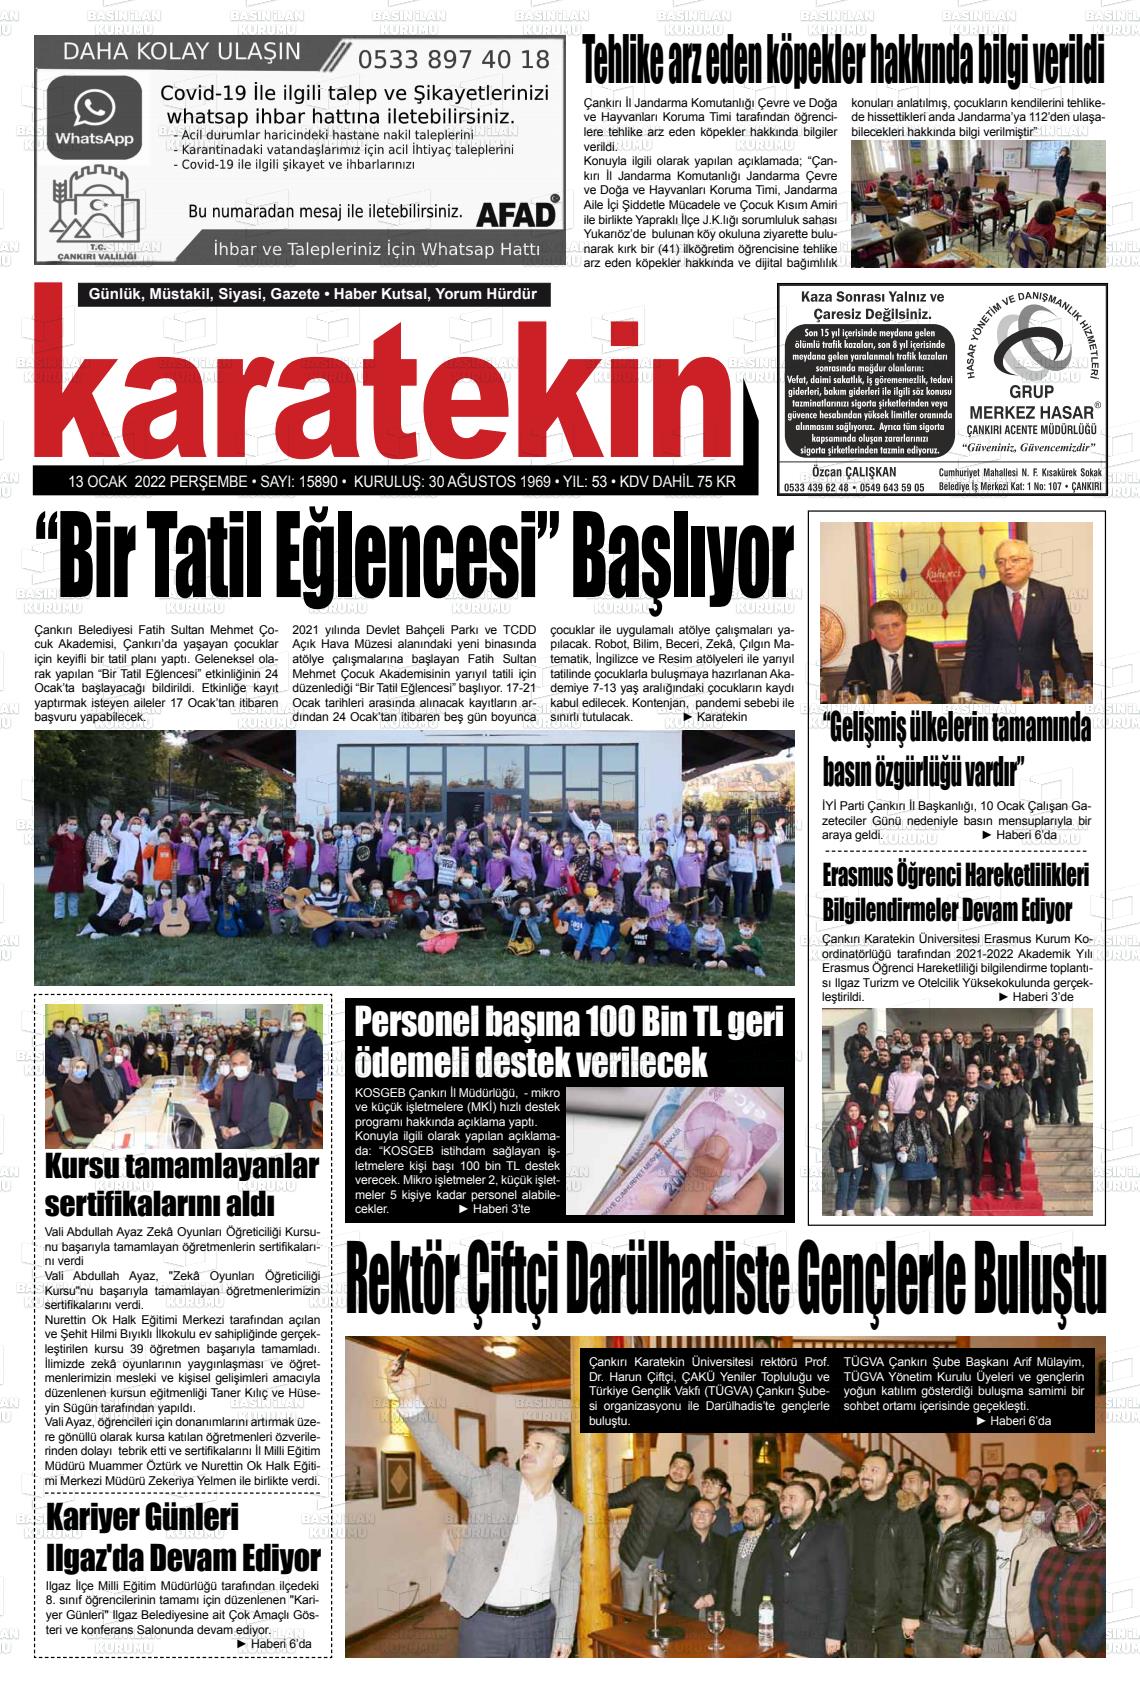 13 Ocak 2022 Karatekin Gazete Manşeti